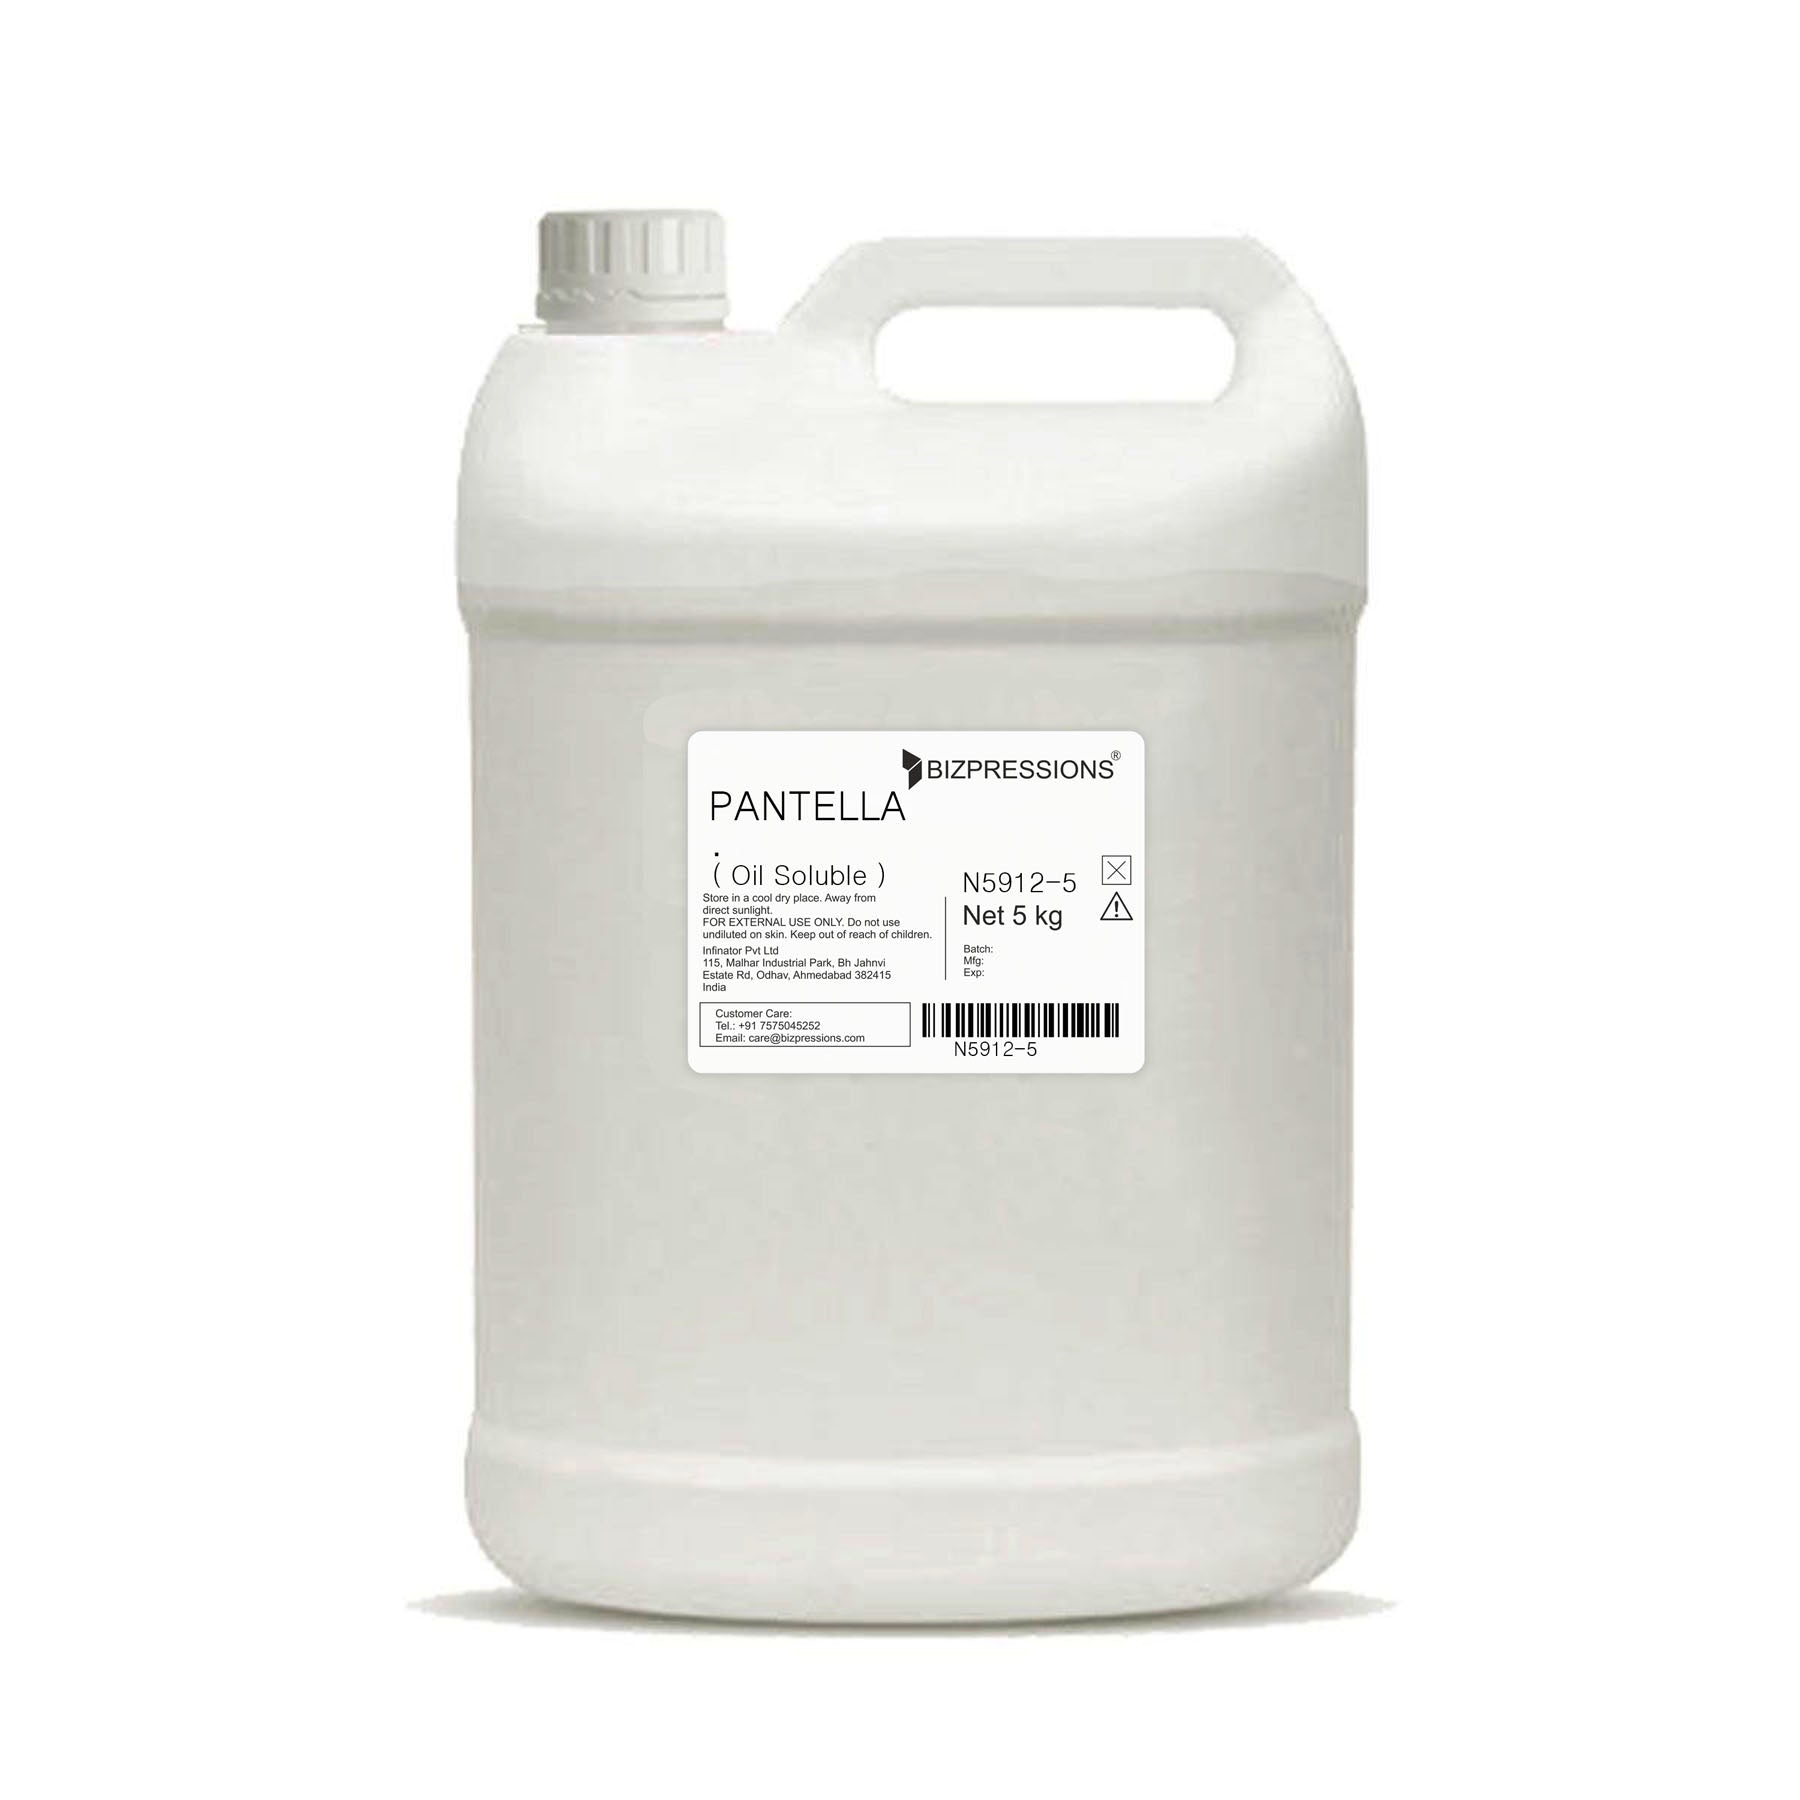 PANTELLA - Fragrance ( Oil Soluble ) - 5 kg